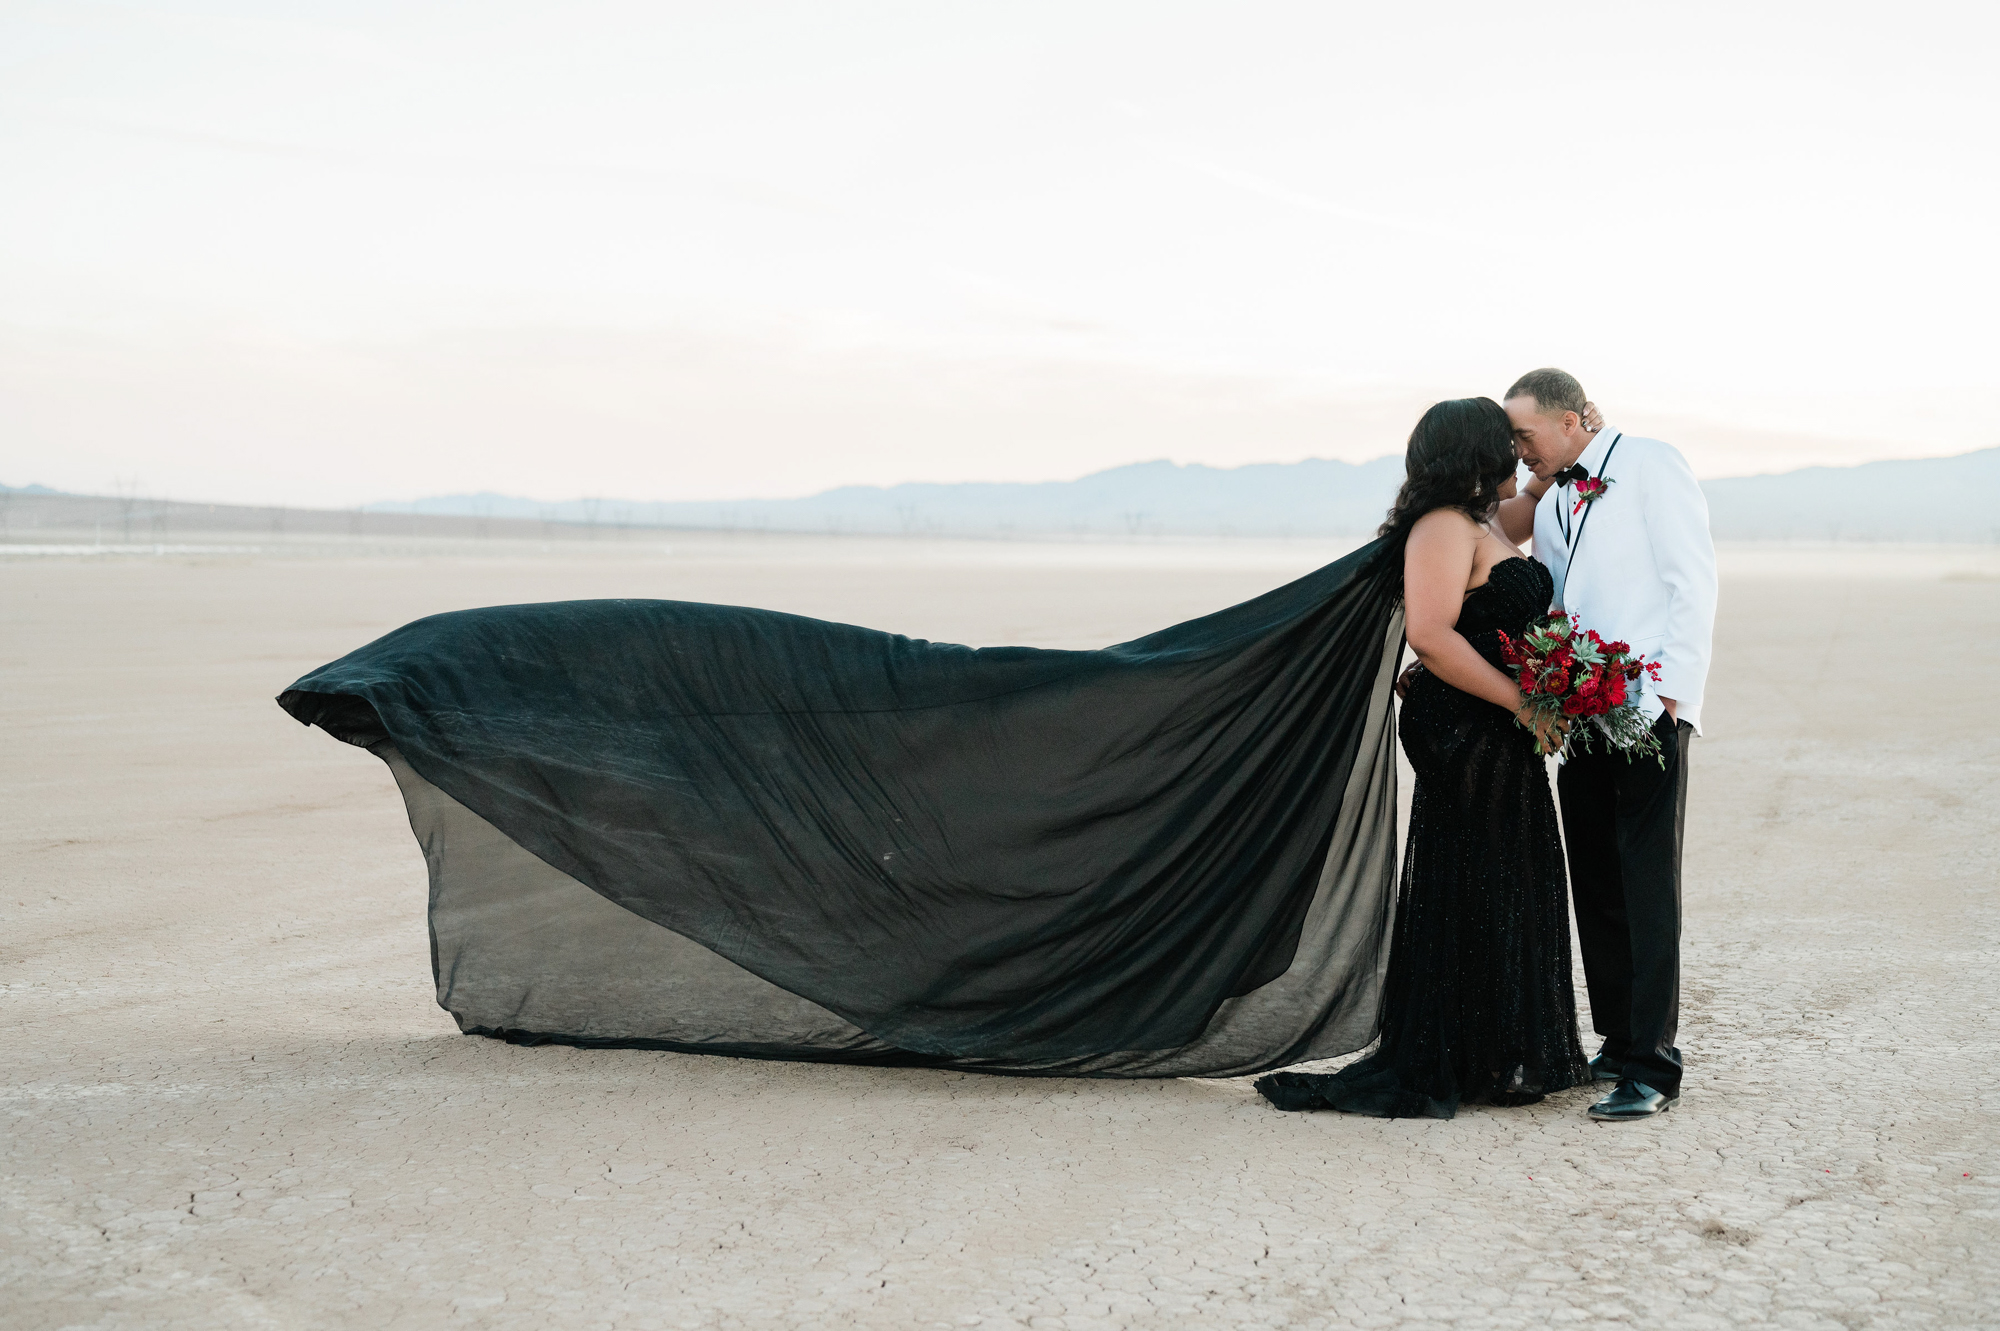 Lakeesha + Johari: A Real Wedding in Dry Lake Bed